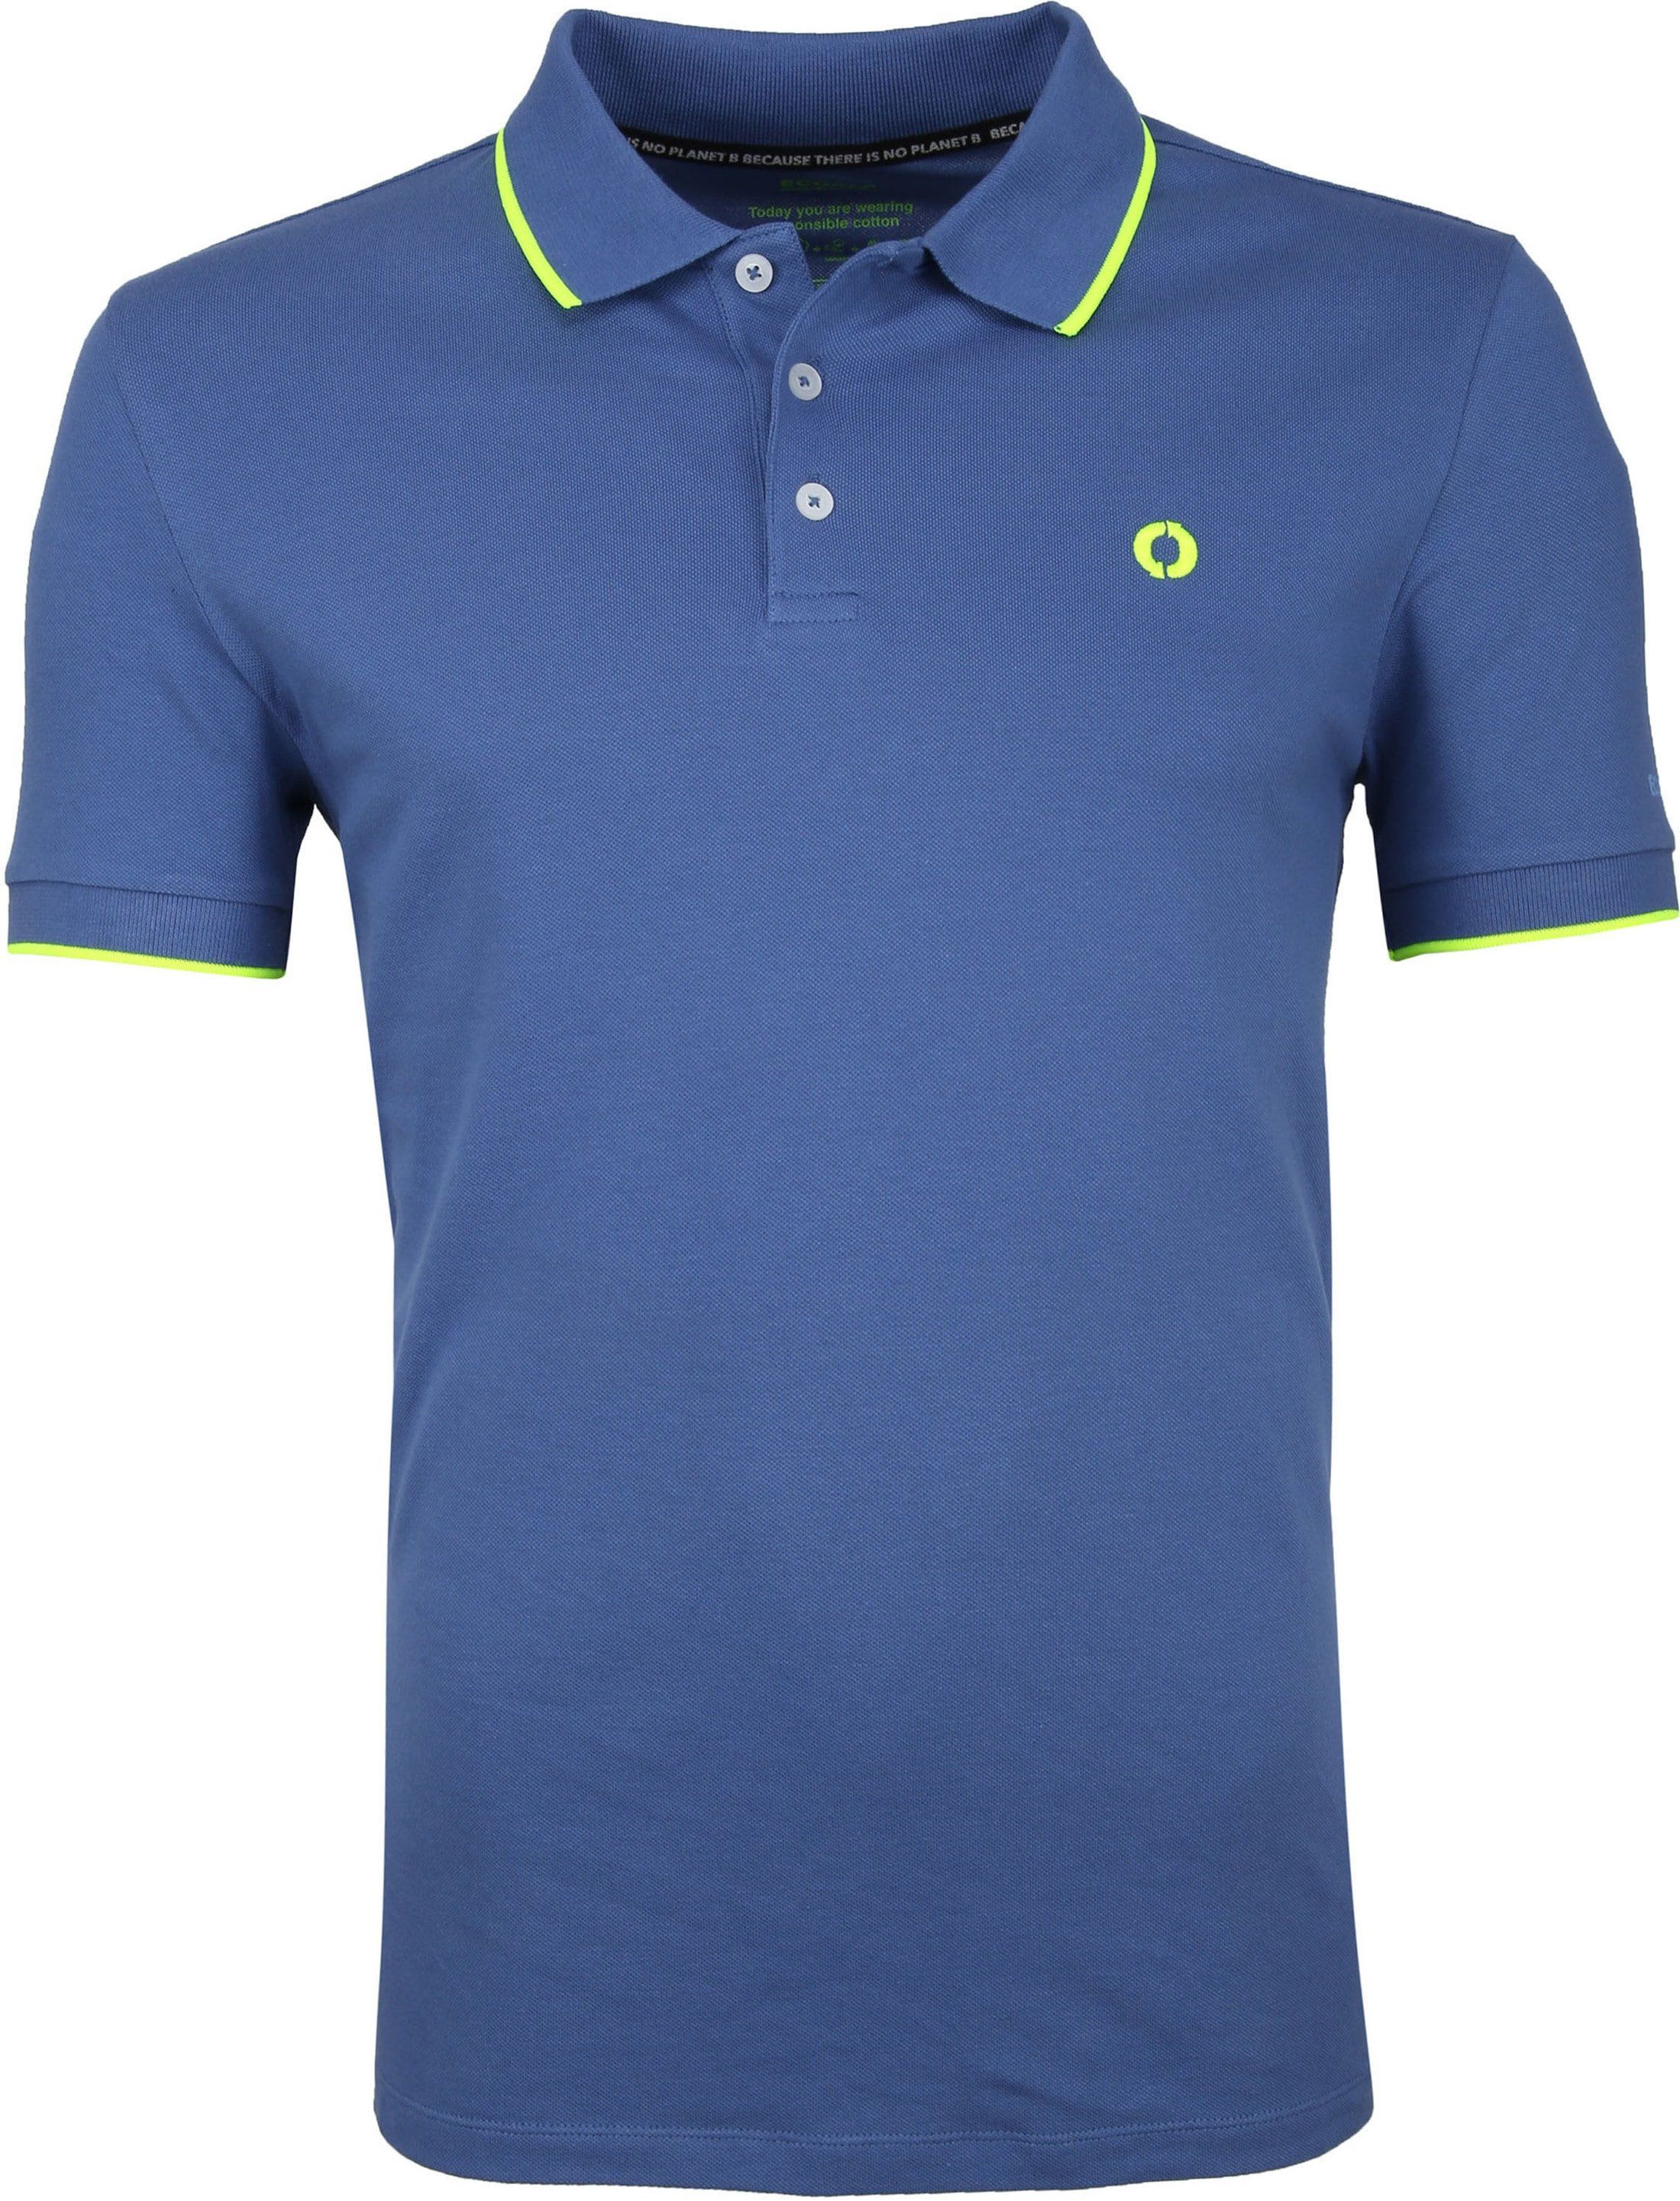 Ecoalf Polo Shirt Sustainable Cotton Blue Yellow size M